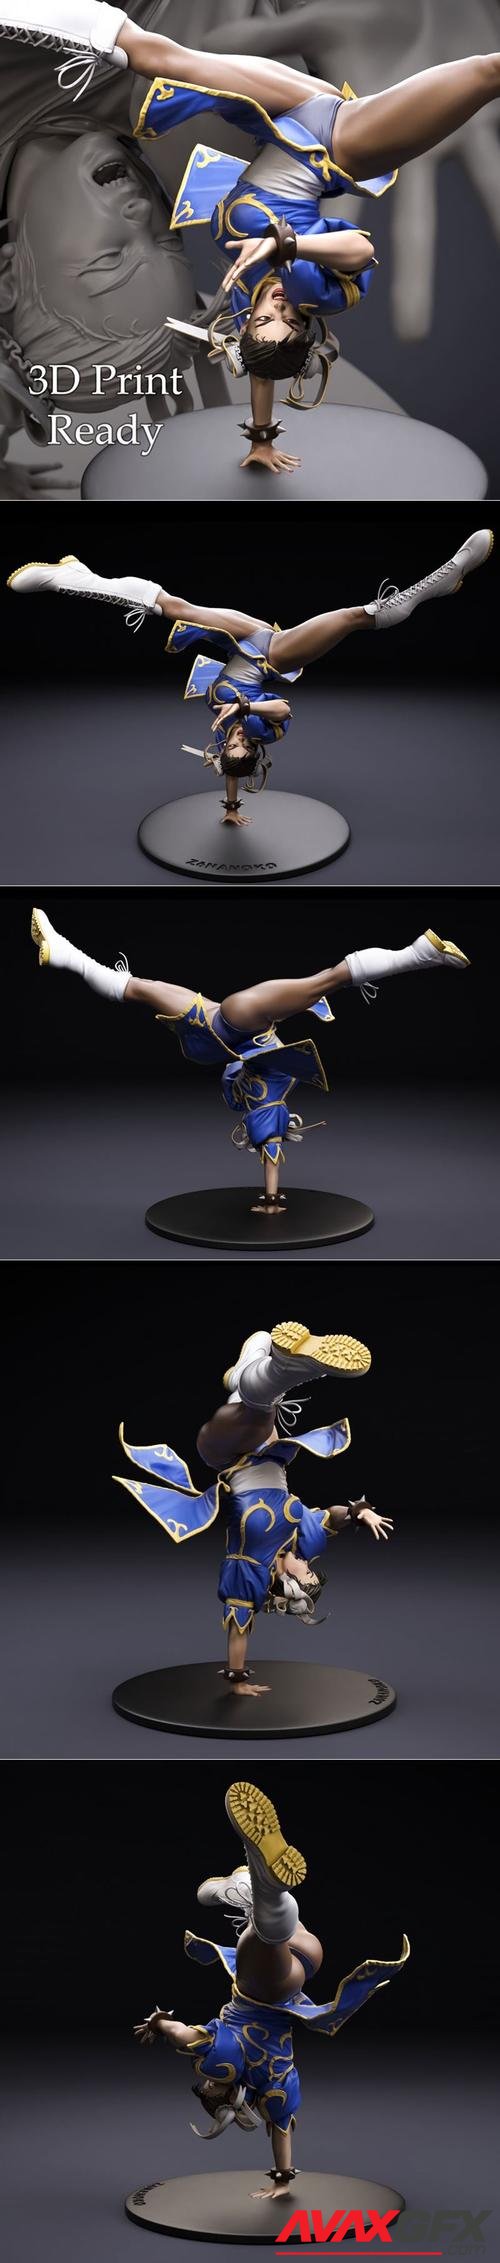 Chun-Li Spinning Bird Kick Fan Art – 3D Print